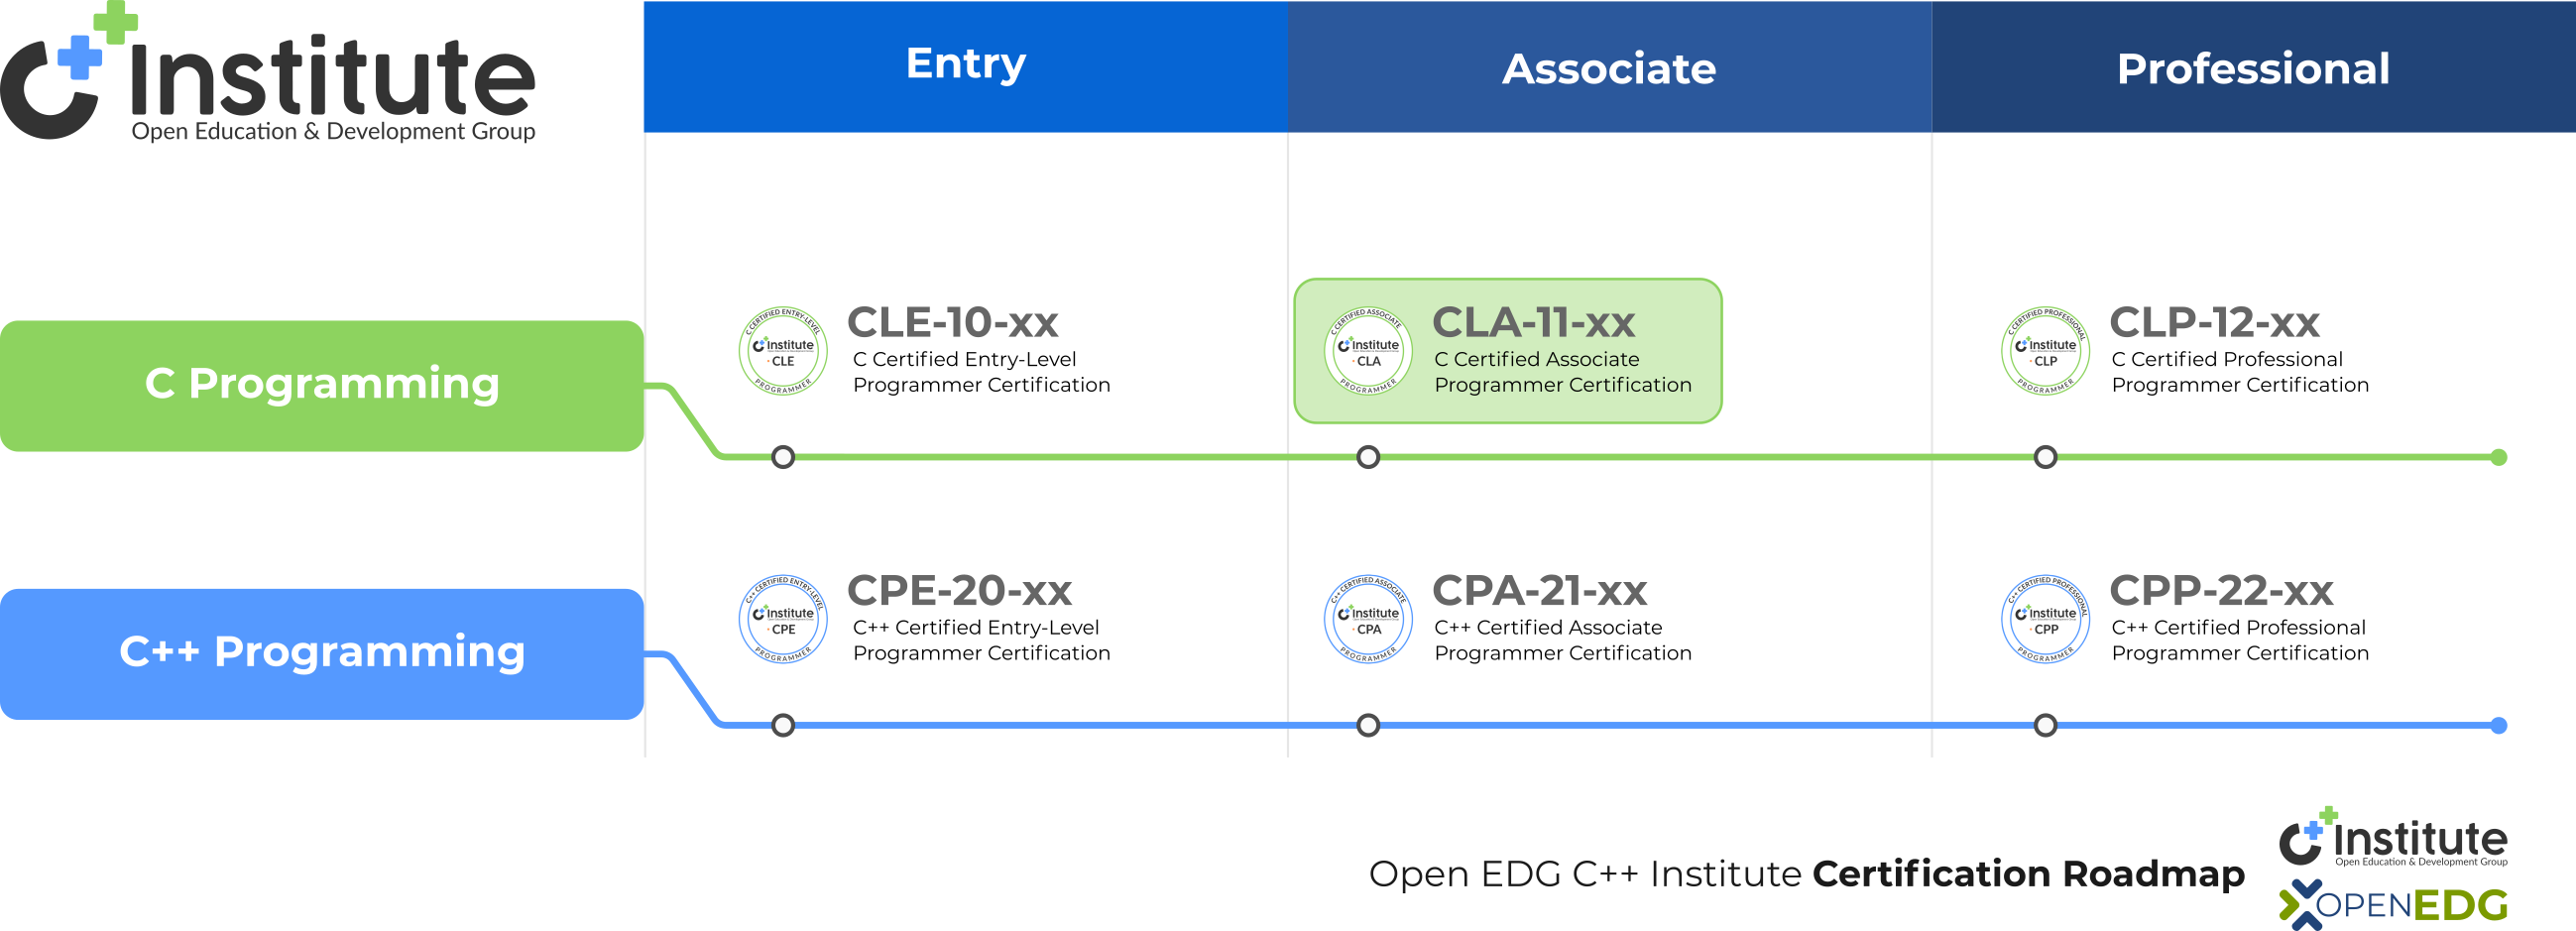 CLA exam on Certification Roadmap